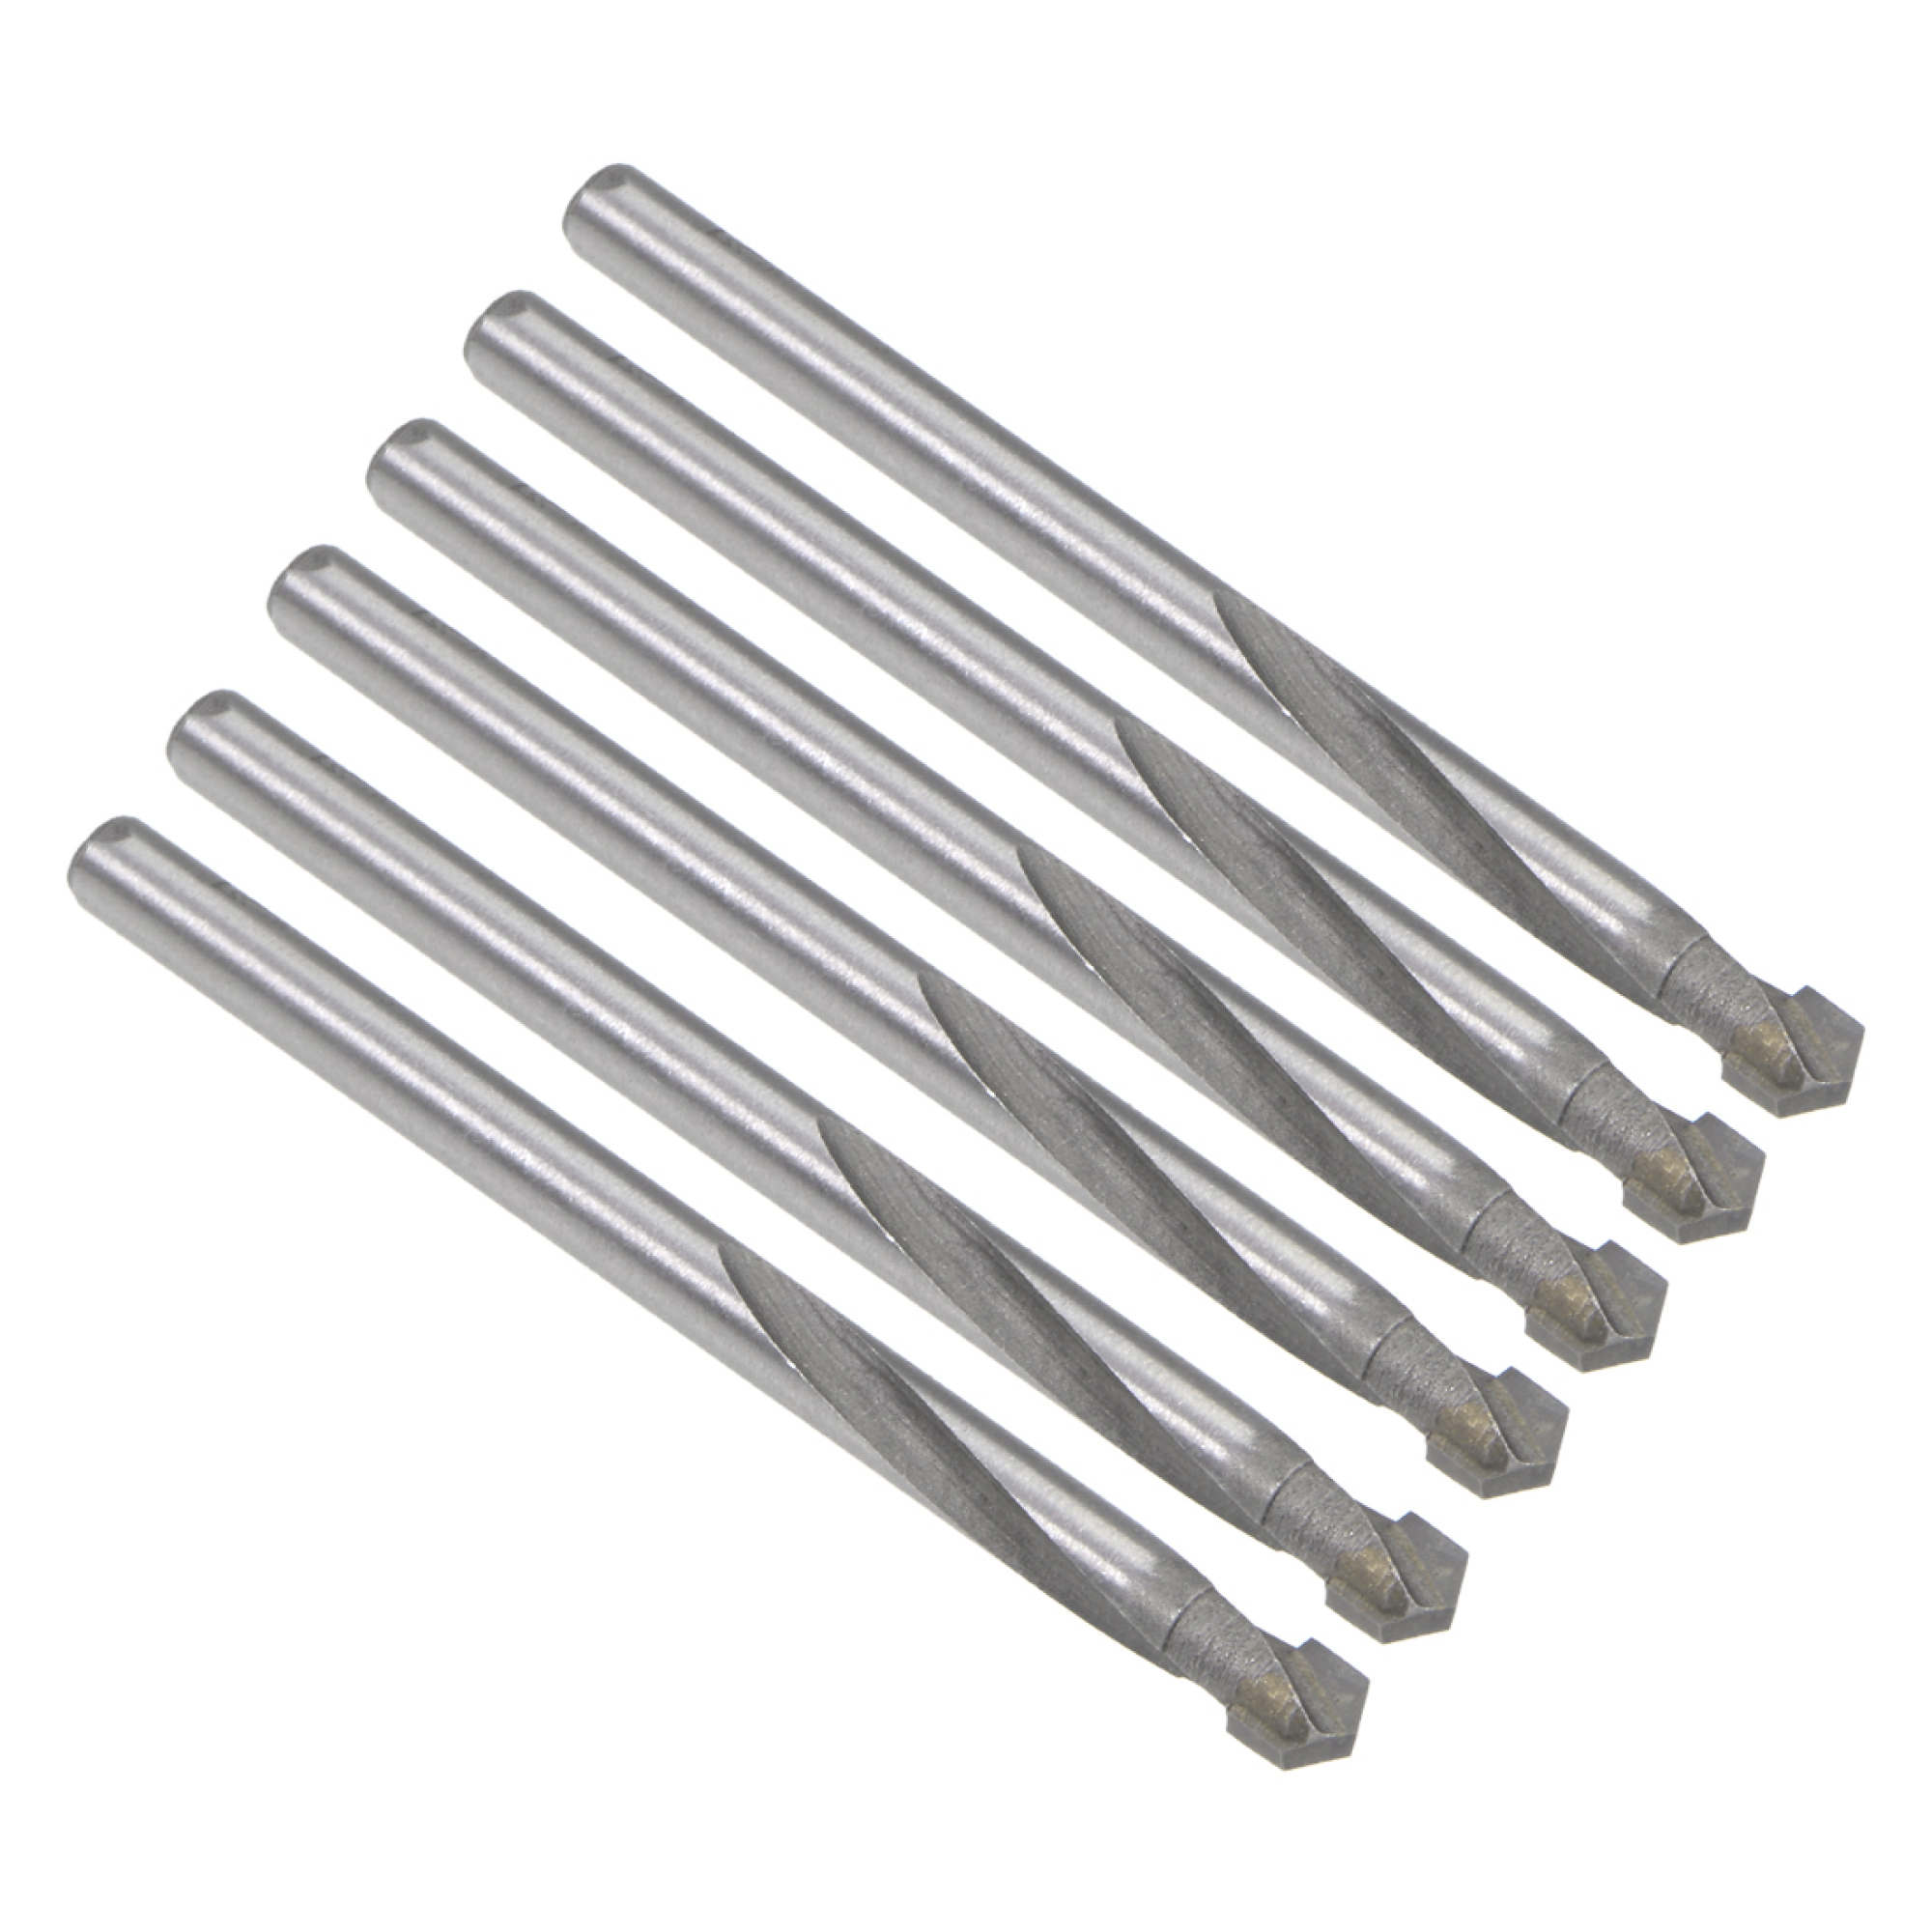 6pc Carbide Twist Drill Bits for Metals 80mm